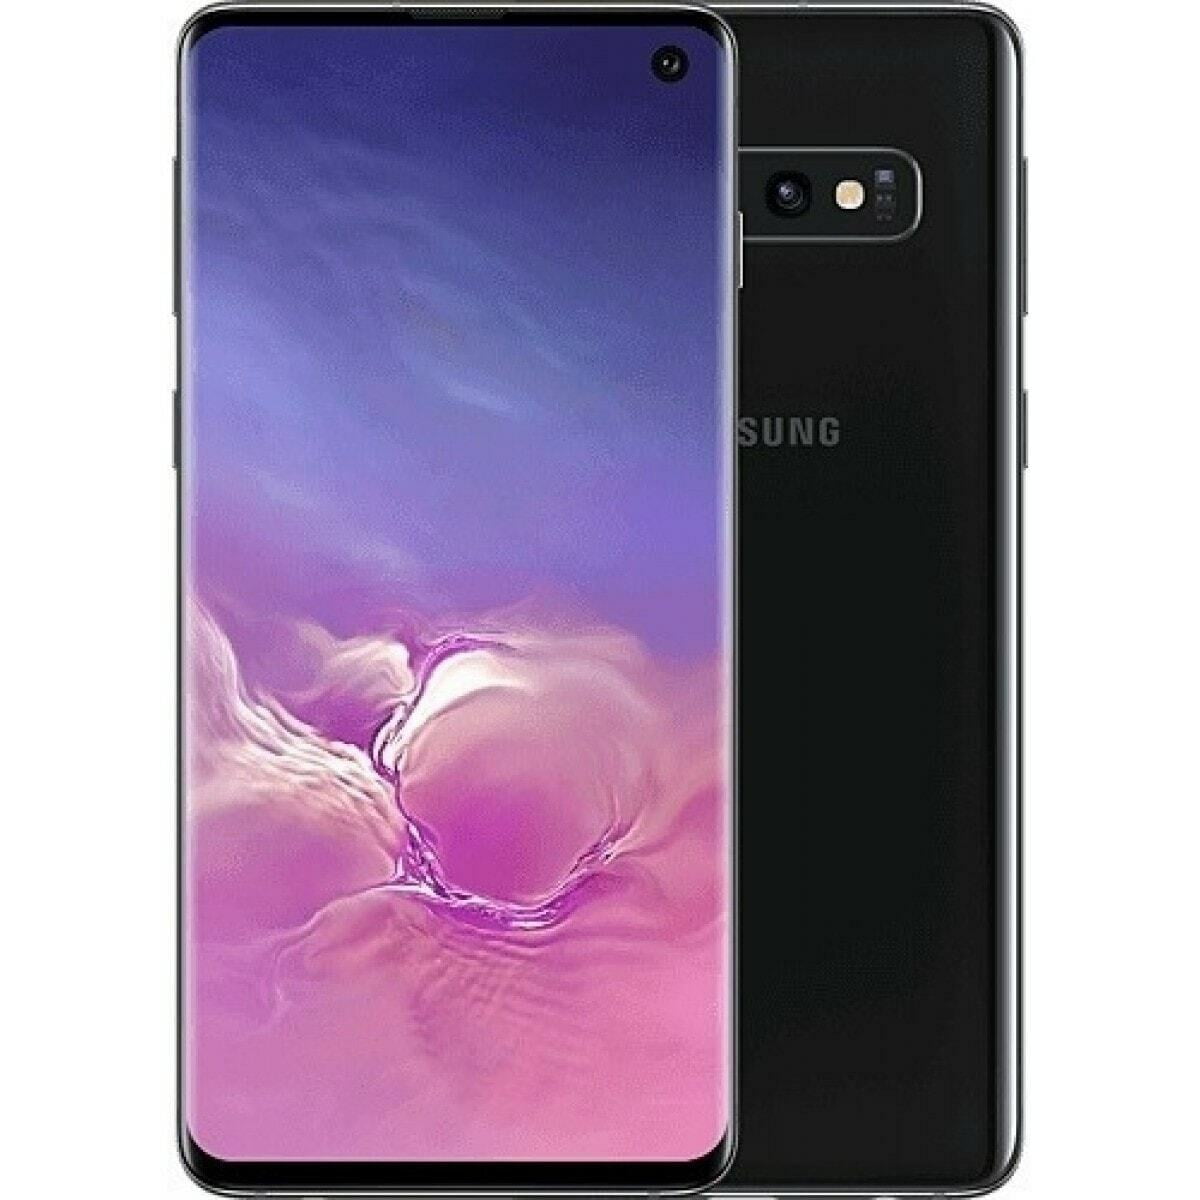 Samsung Galaxy S10 128GB SM-G973U1 All Colors - Unlocked Cell Phones Good